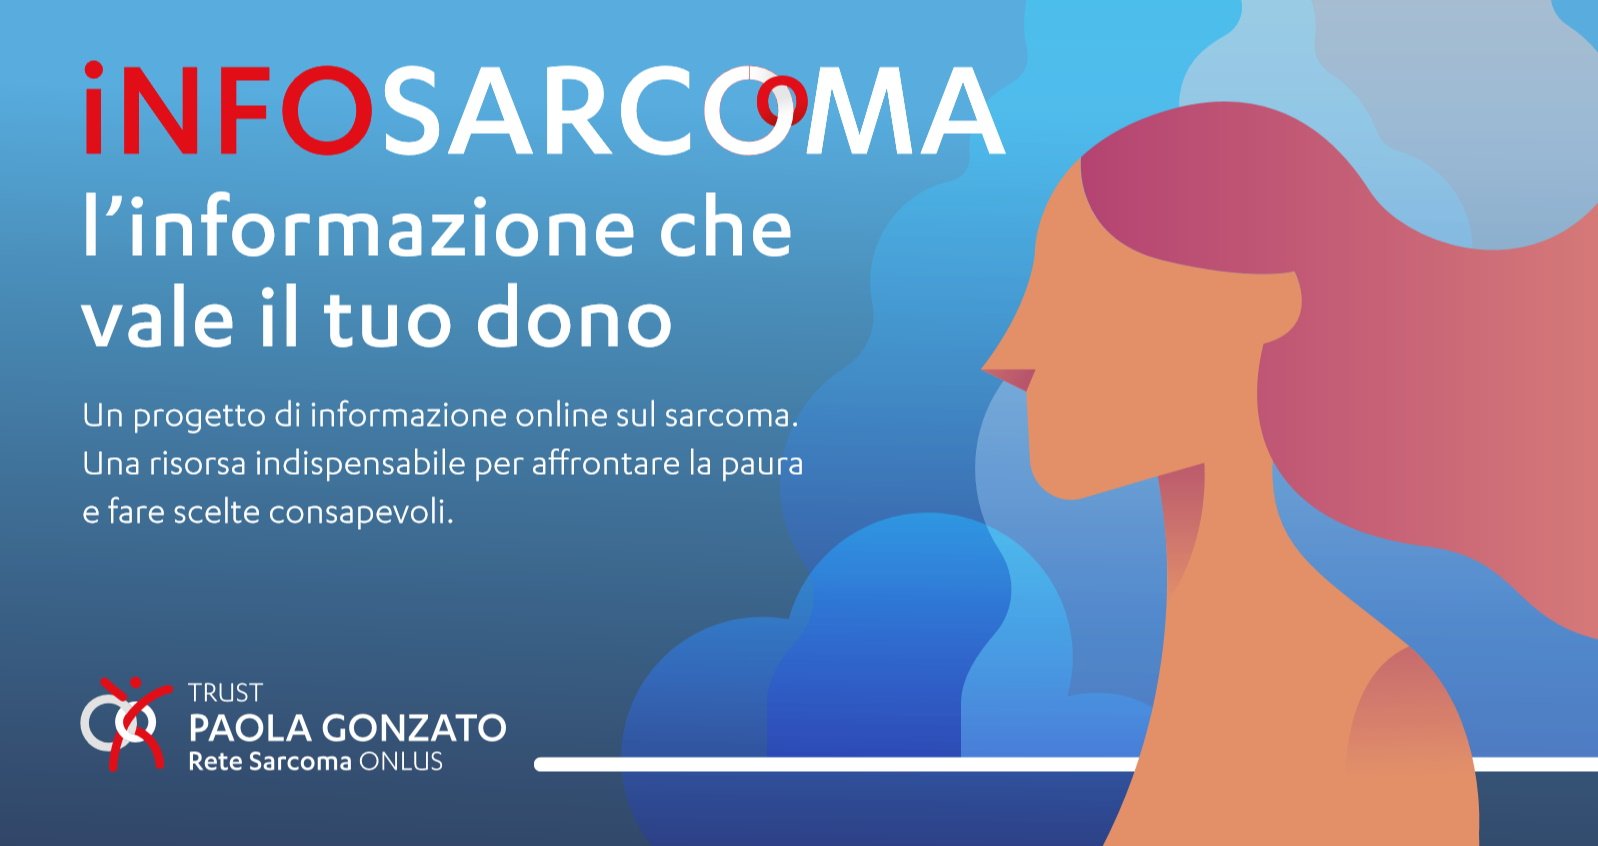 INFOSARCOMA-Trust Paola Gonzato-Rete Sarcoma ONLUS